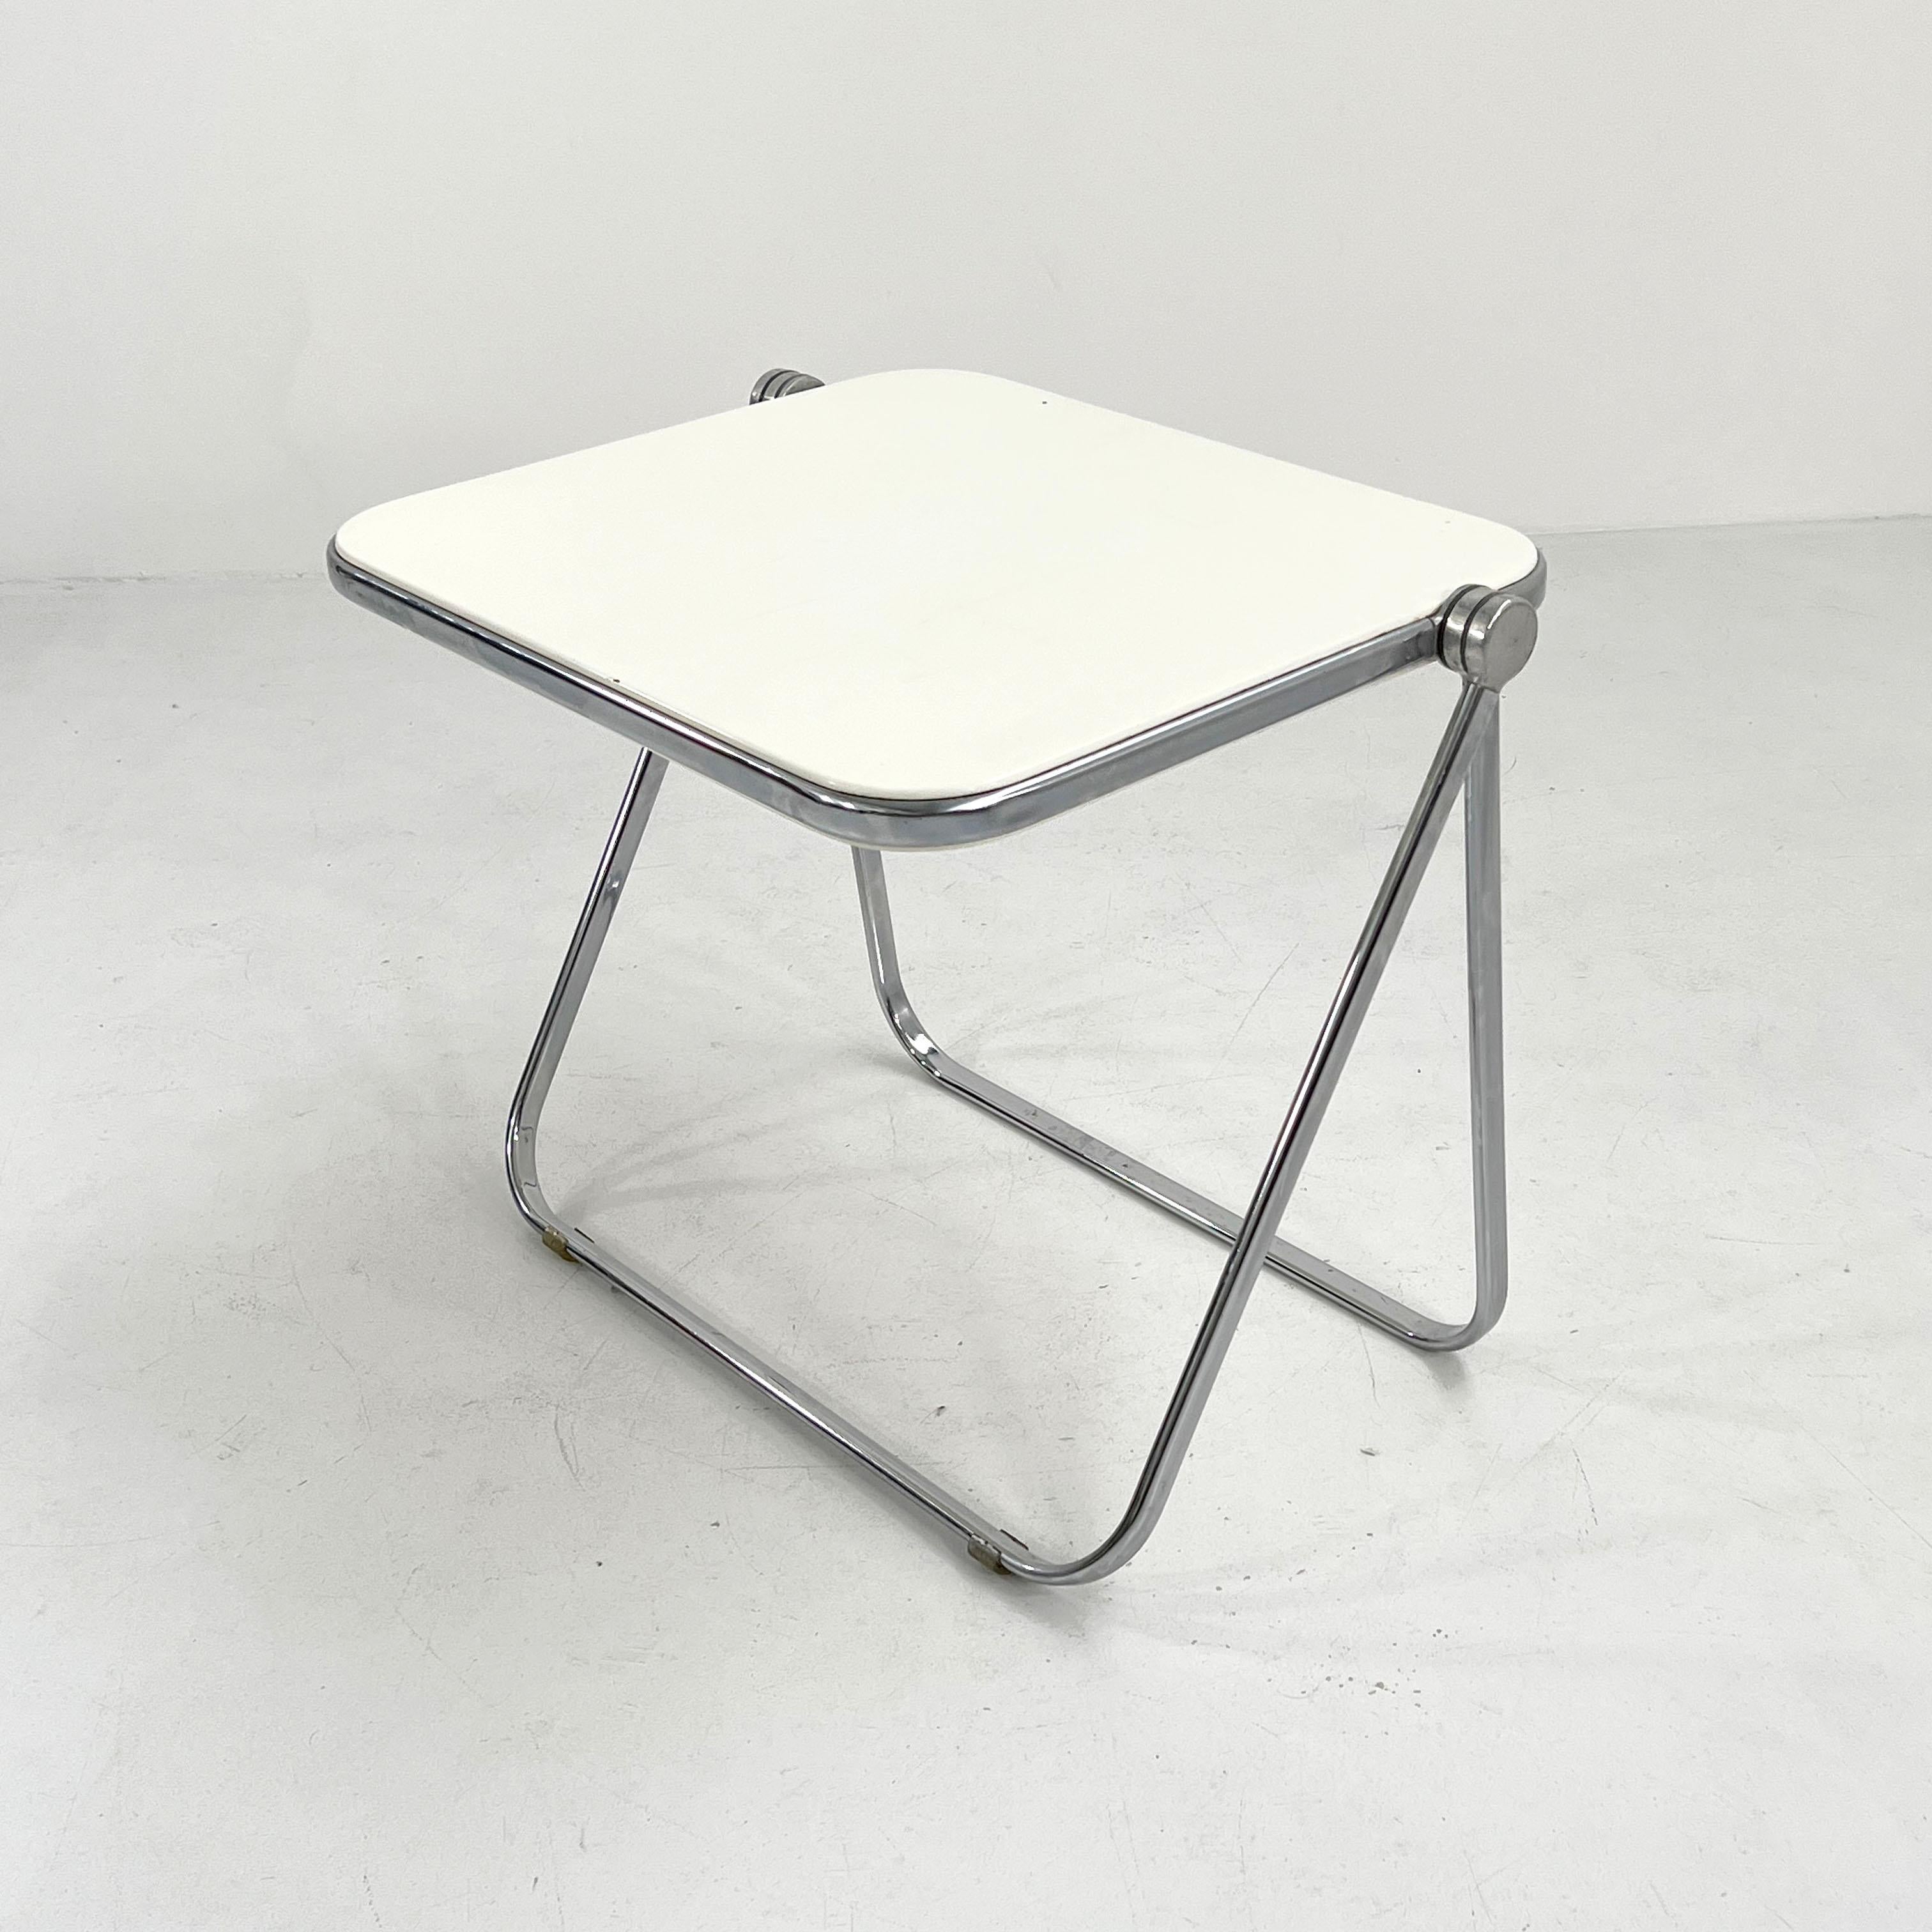 Designer - Giancarlo Piretti
Producer - Anonima Castelli
Model - Platone Folding Desk 
Design Period - Seventies
Measurements - Width 82 cm x Depth 65 cm x Height 70 cm
Materials - Perspex, Steel
Color - White, Silver
Condition - Good